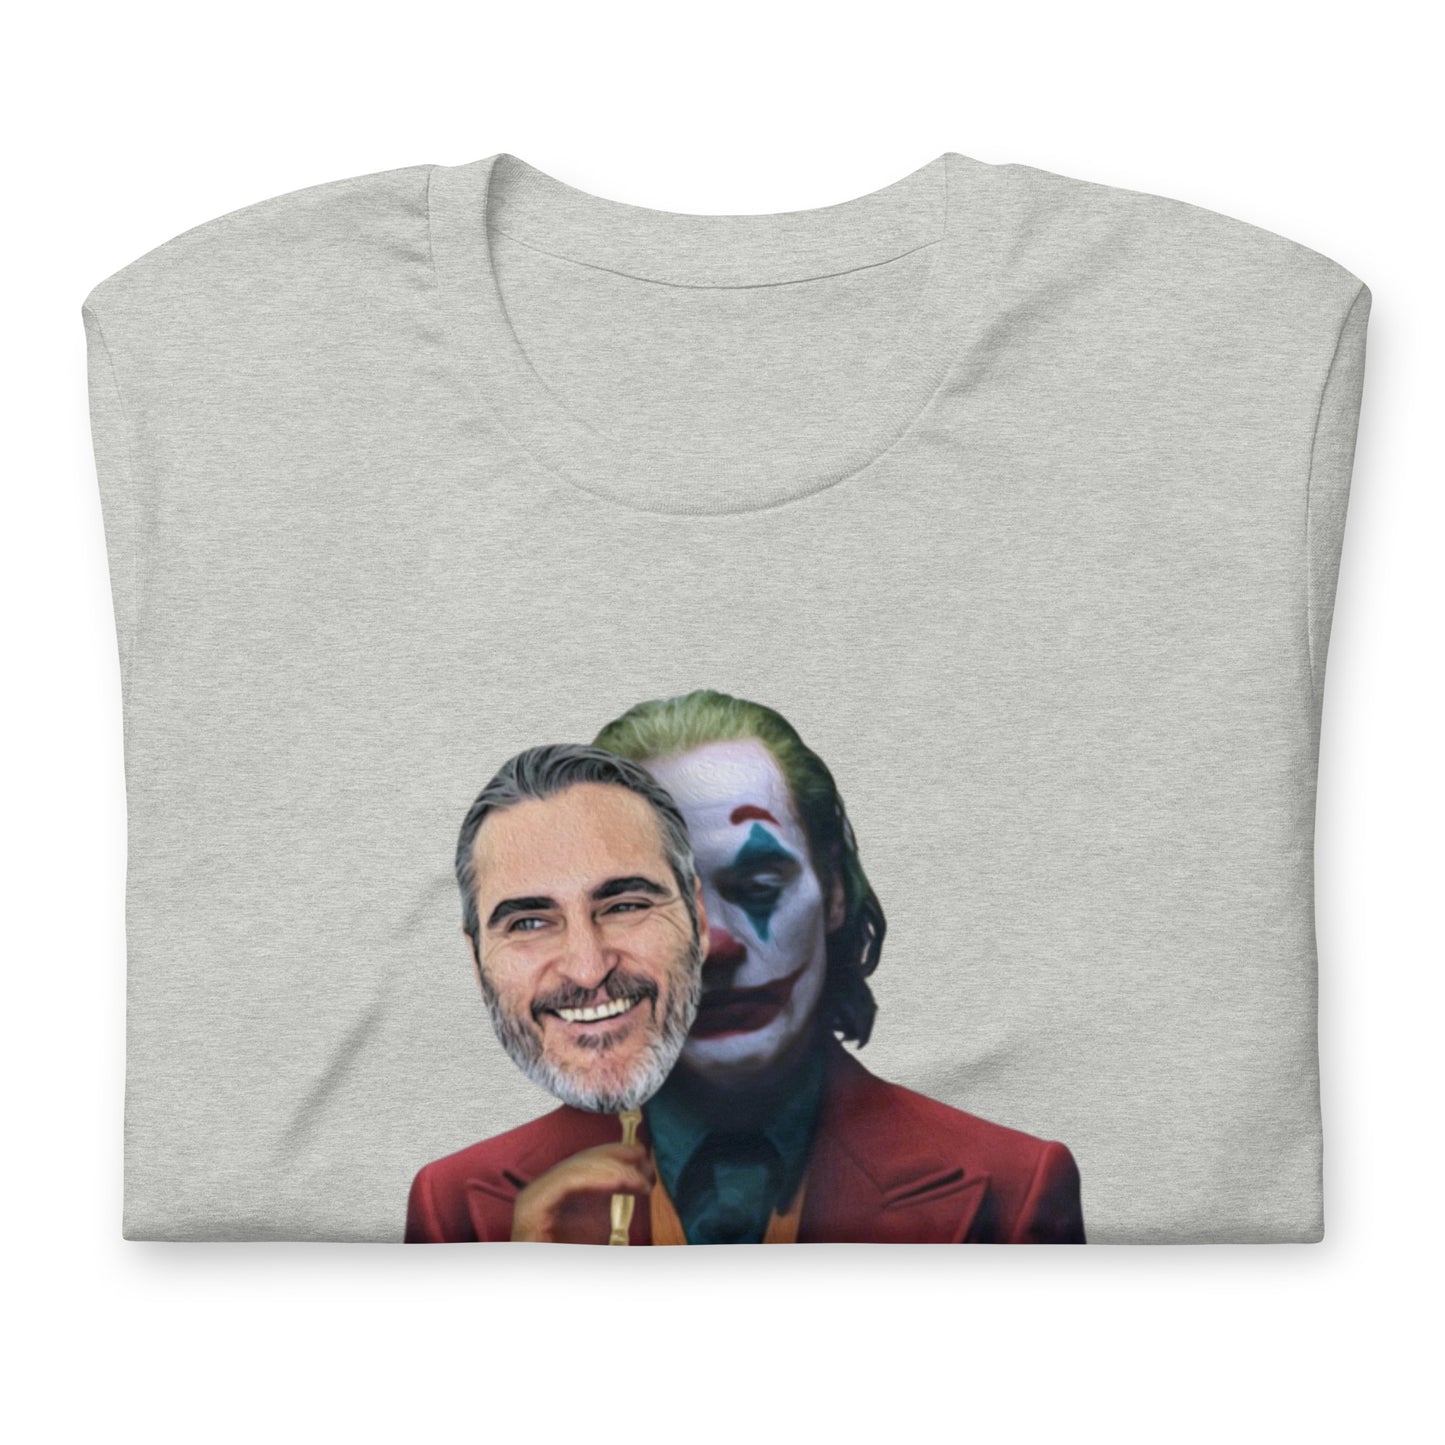 Joaquin Phoenix Mask KiSS Unisex t-shirt - Joker Folie à Deux